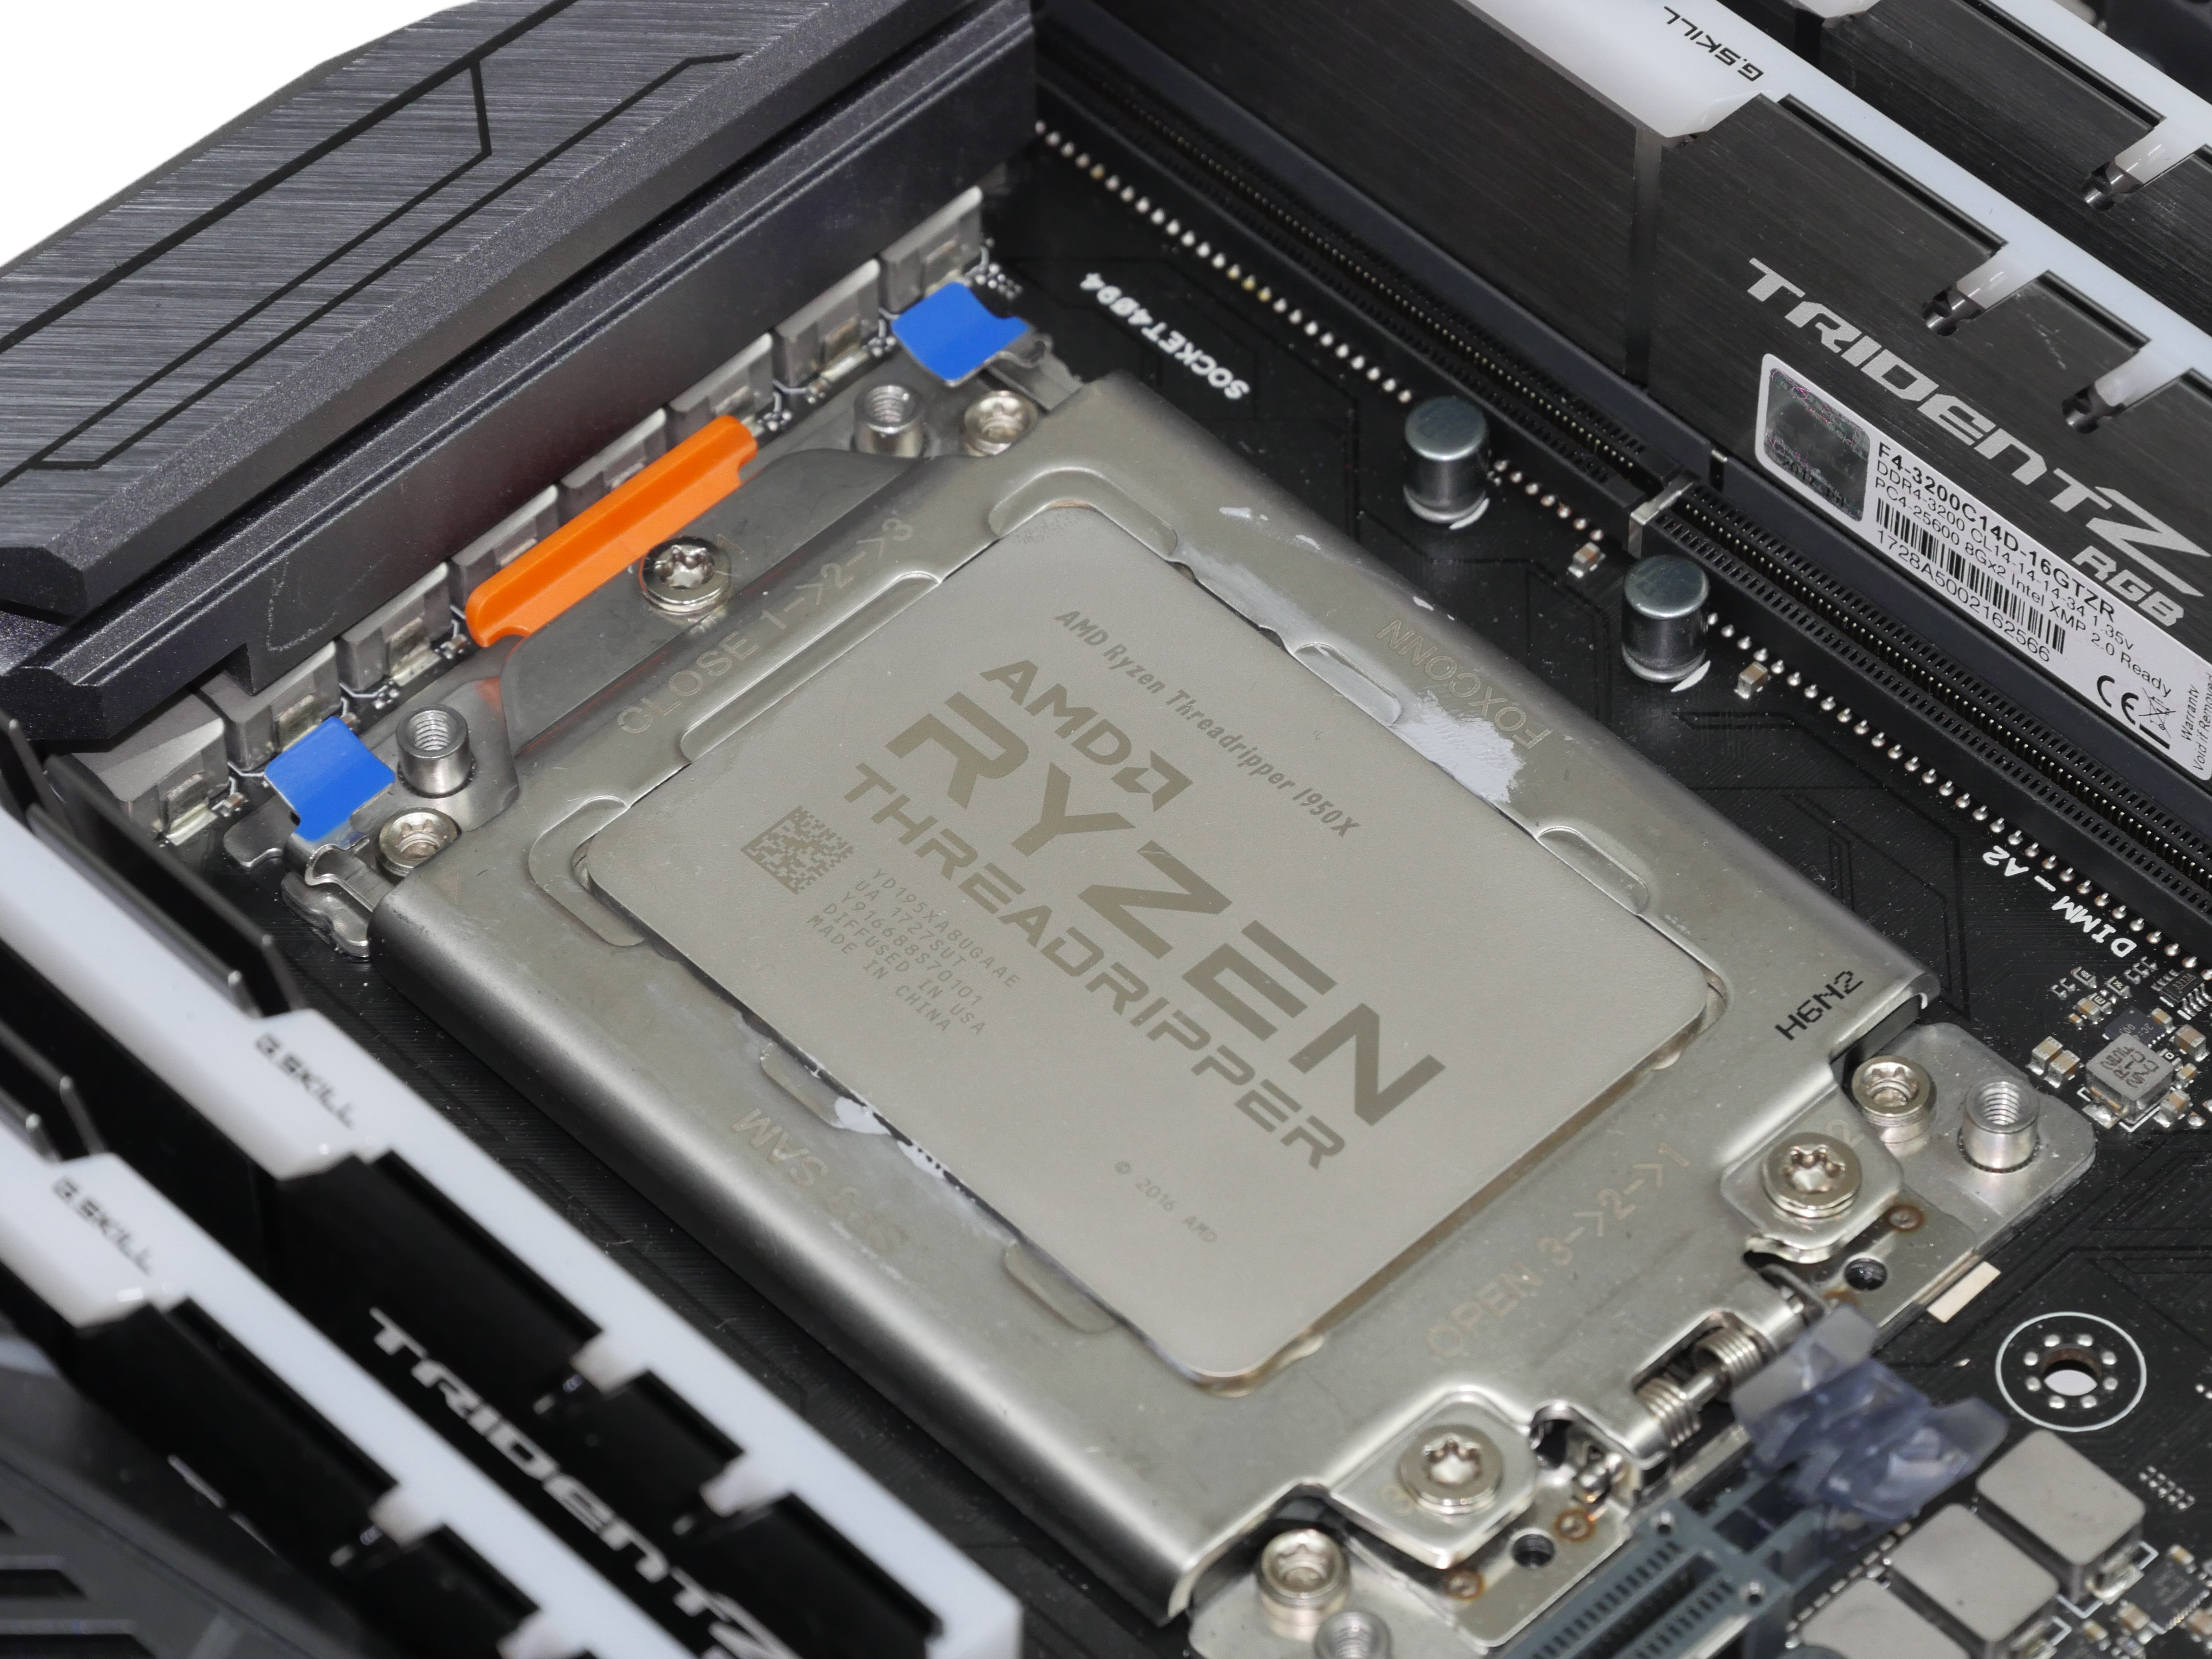 AMD Ryzen Threadripper 1950X (16C32T) & 1920X (12C24T) CPU Review 